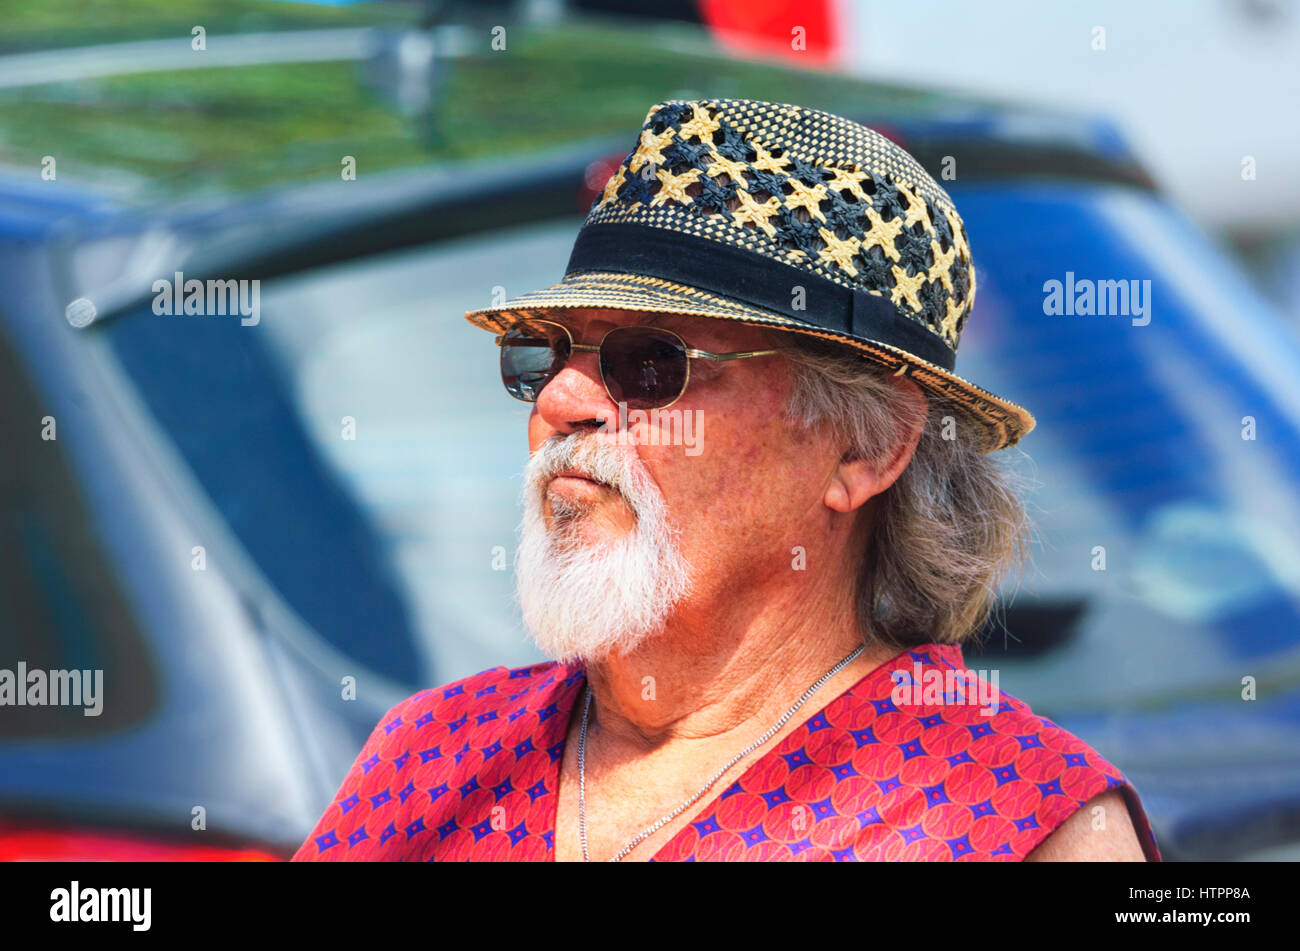 A mature male spectator wearing a straw hat at Kiama Jazz & Blues Festival 2017, Illawarra Coast, New South Wales, NSW, Australia Stock Photo